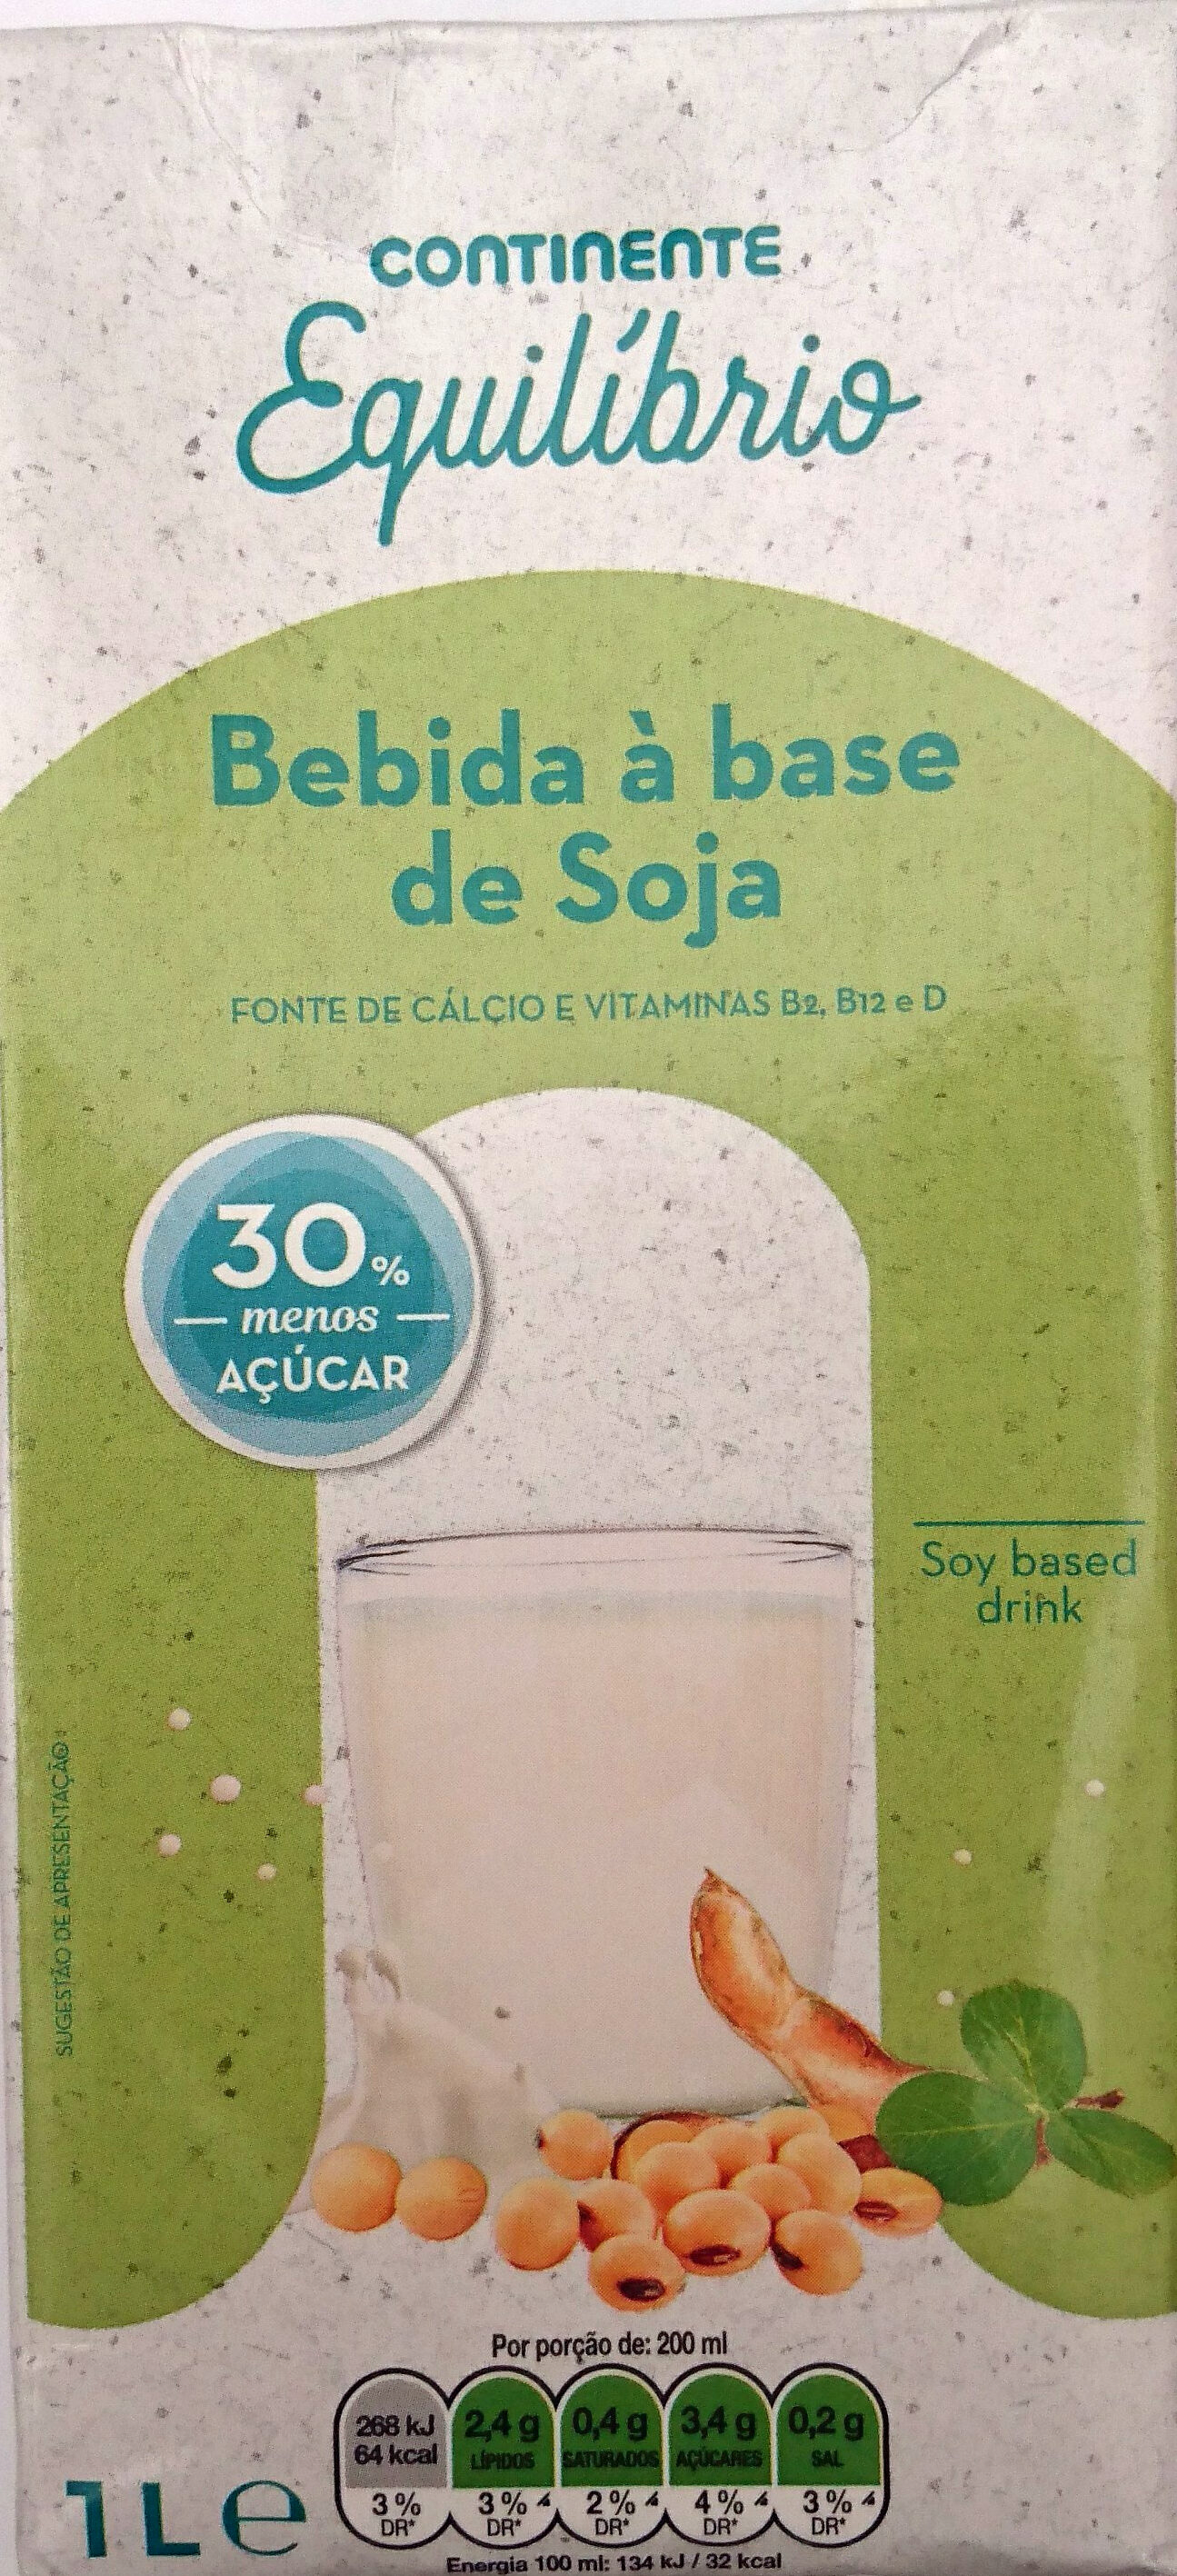 Bebida à base de Soja, 30% menos Açúcar - Product - pt